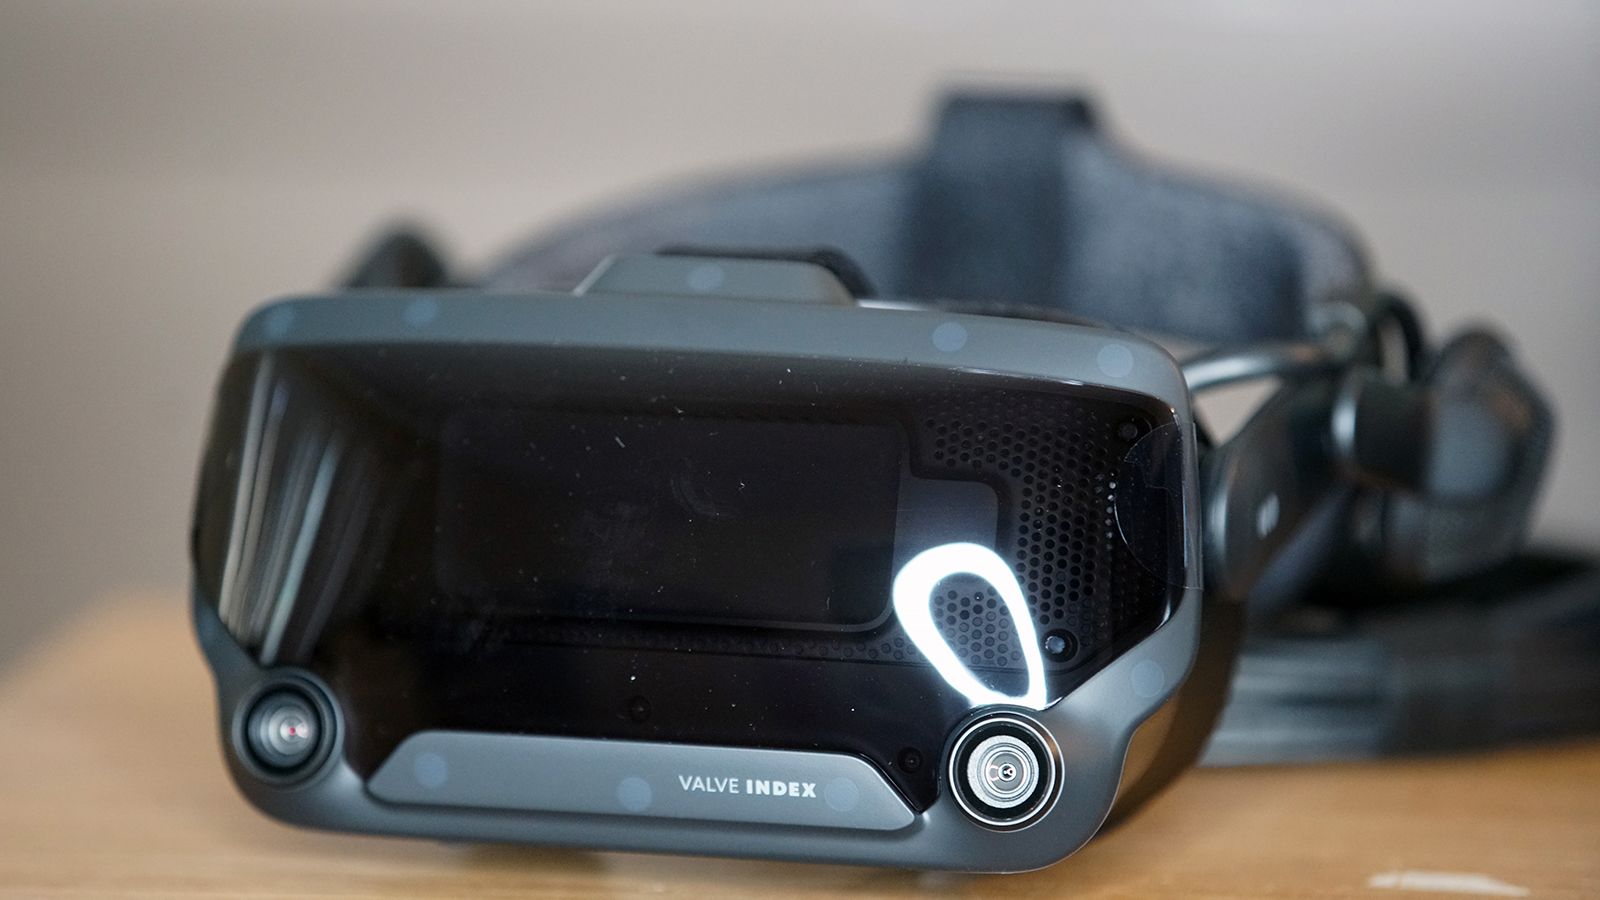 Valve Index The best premium VR headset for PC gamers | CNN Underscored